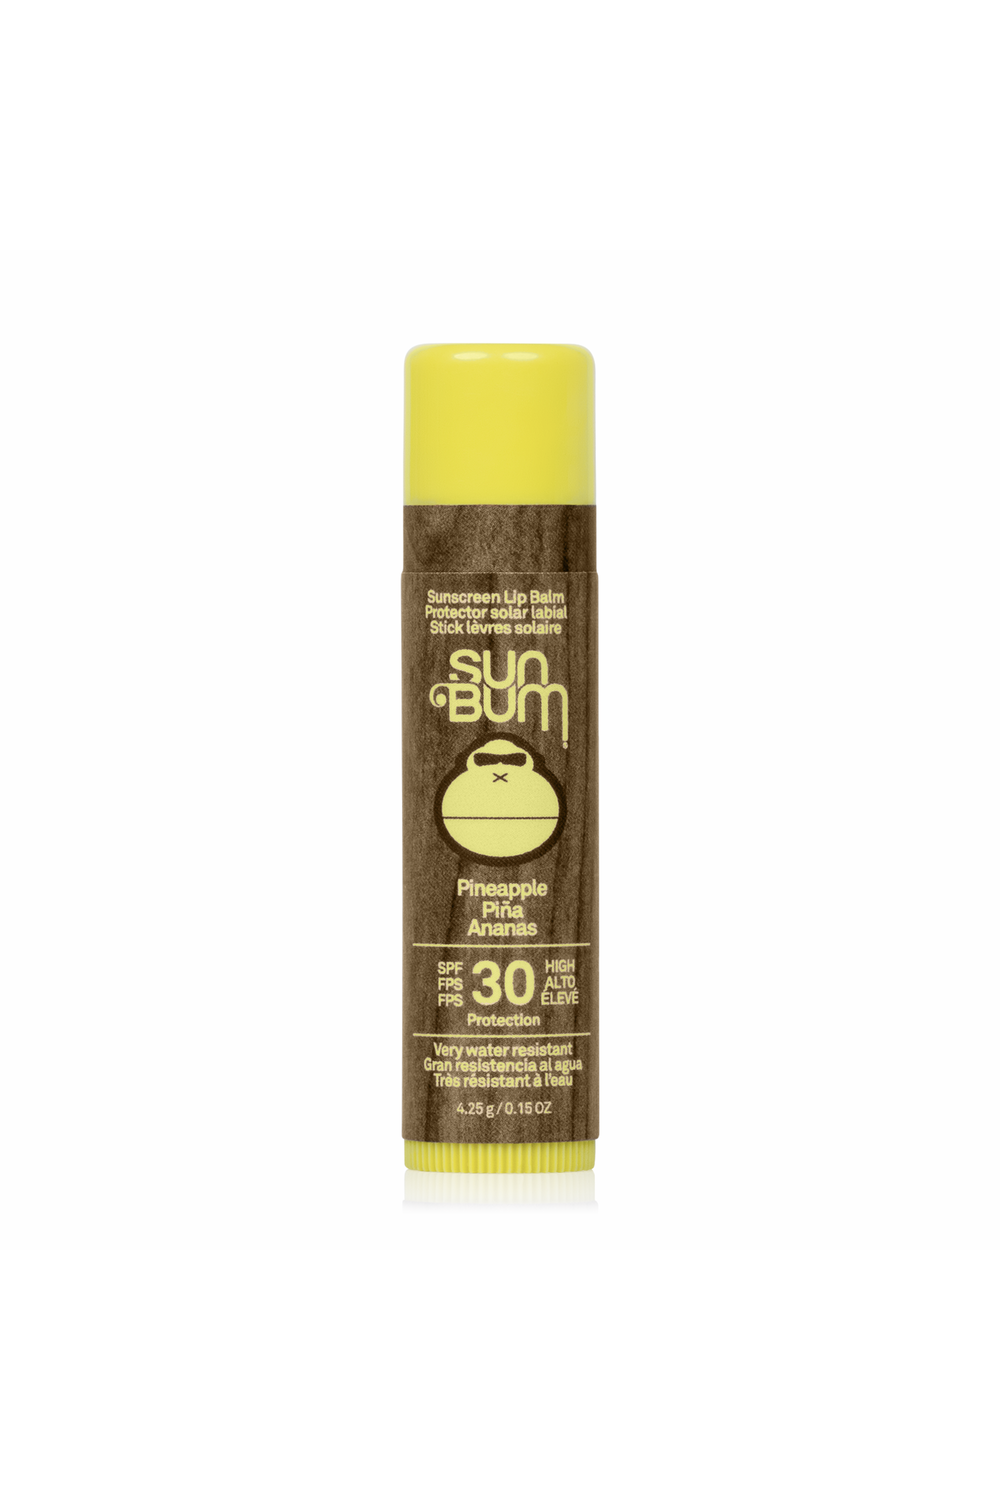 Sun Bum Original SPF 30 Sunscreen Lip Balm – Pineapple